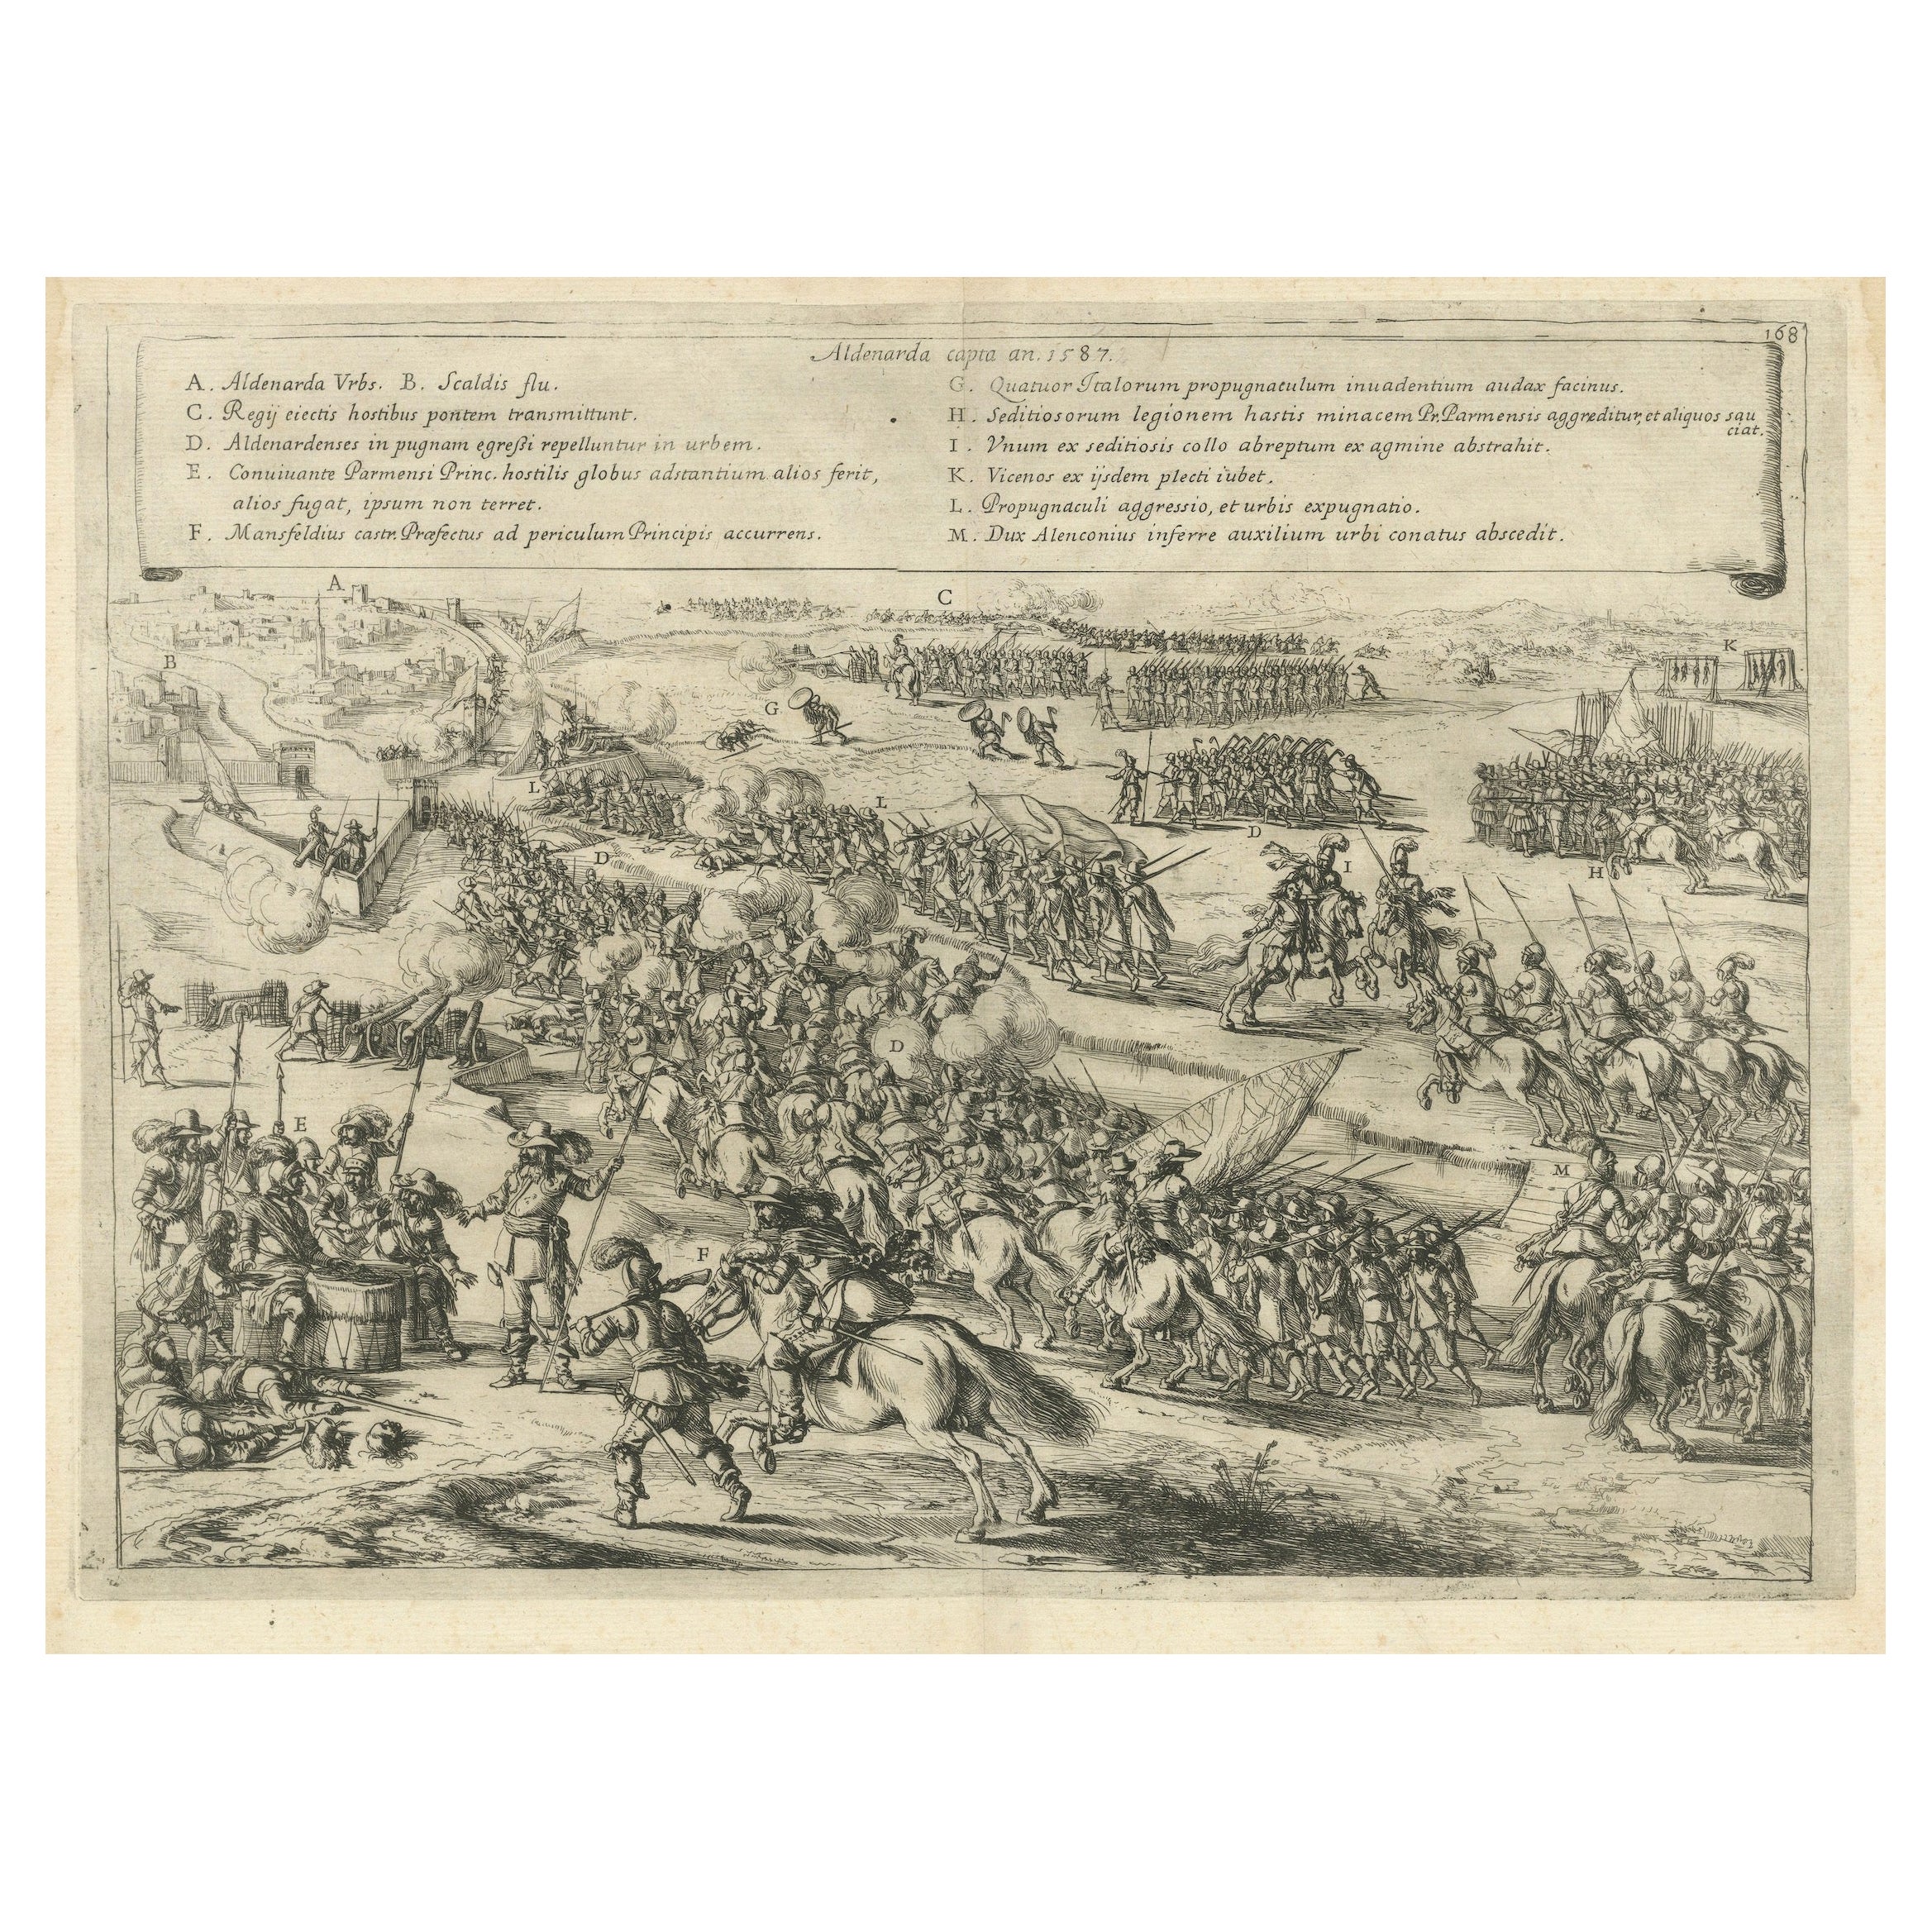 The Aftermath of Battle for Oudenaarde in the Eighty Years' War, eingraviert 1632